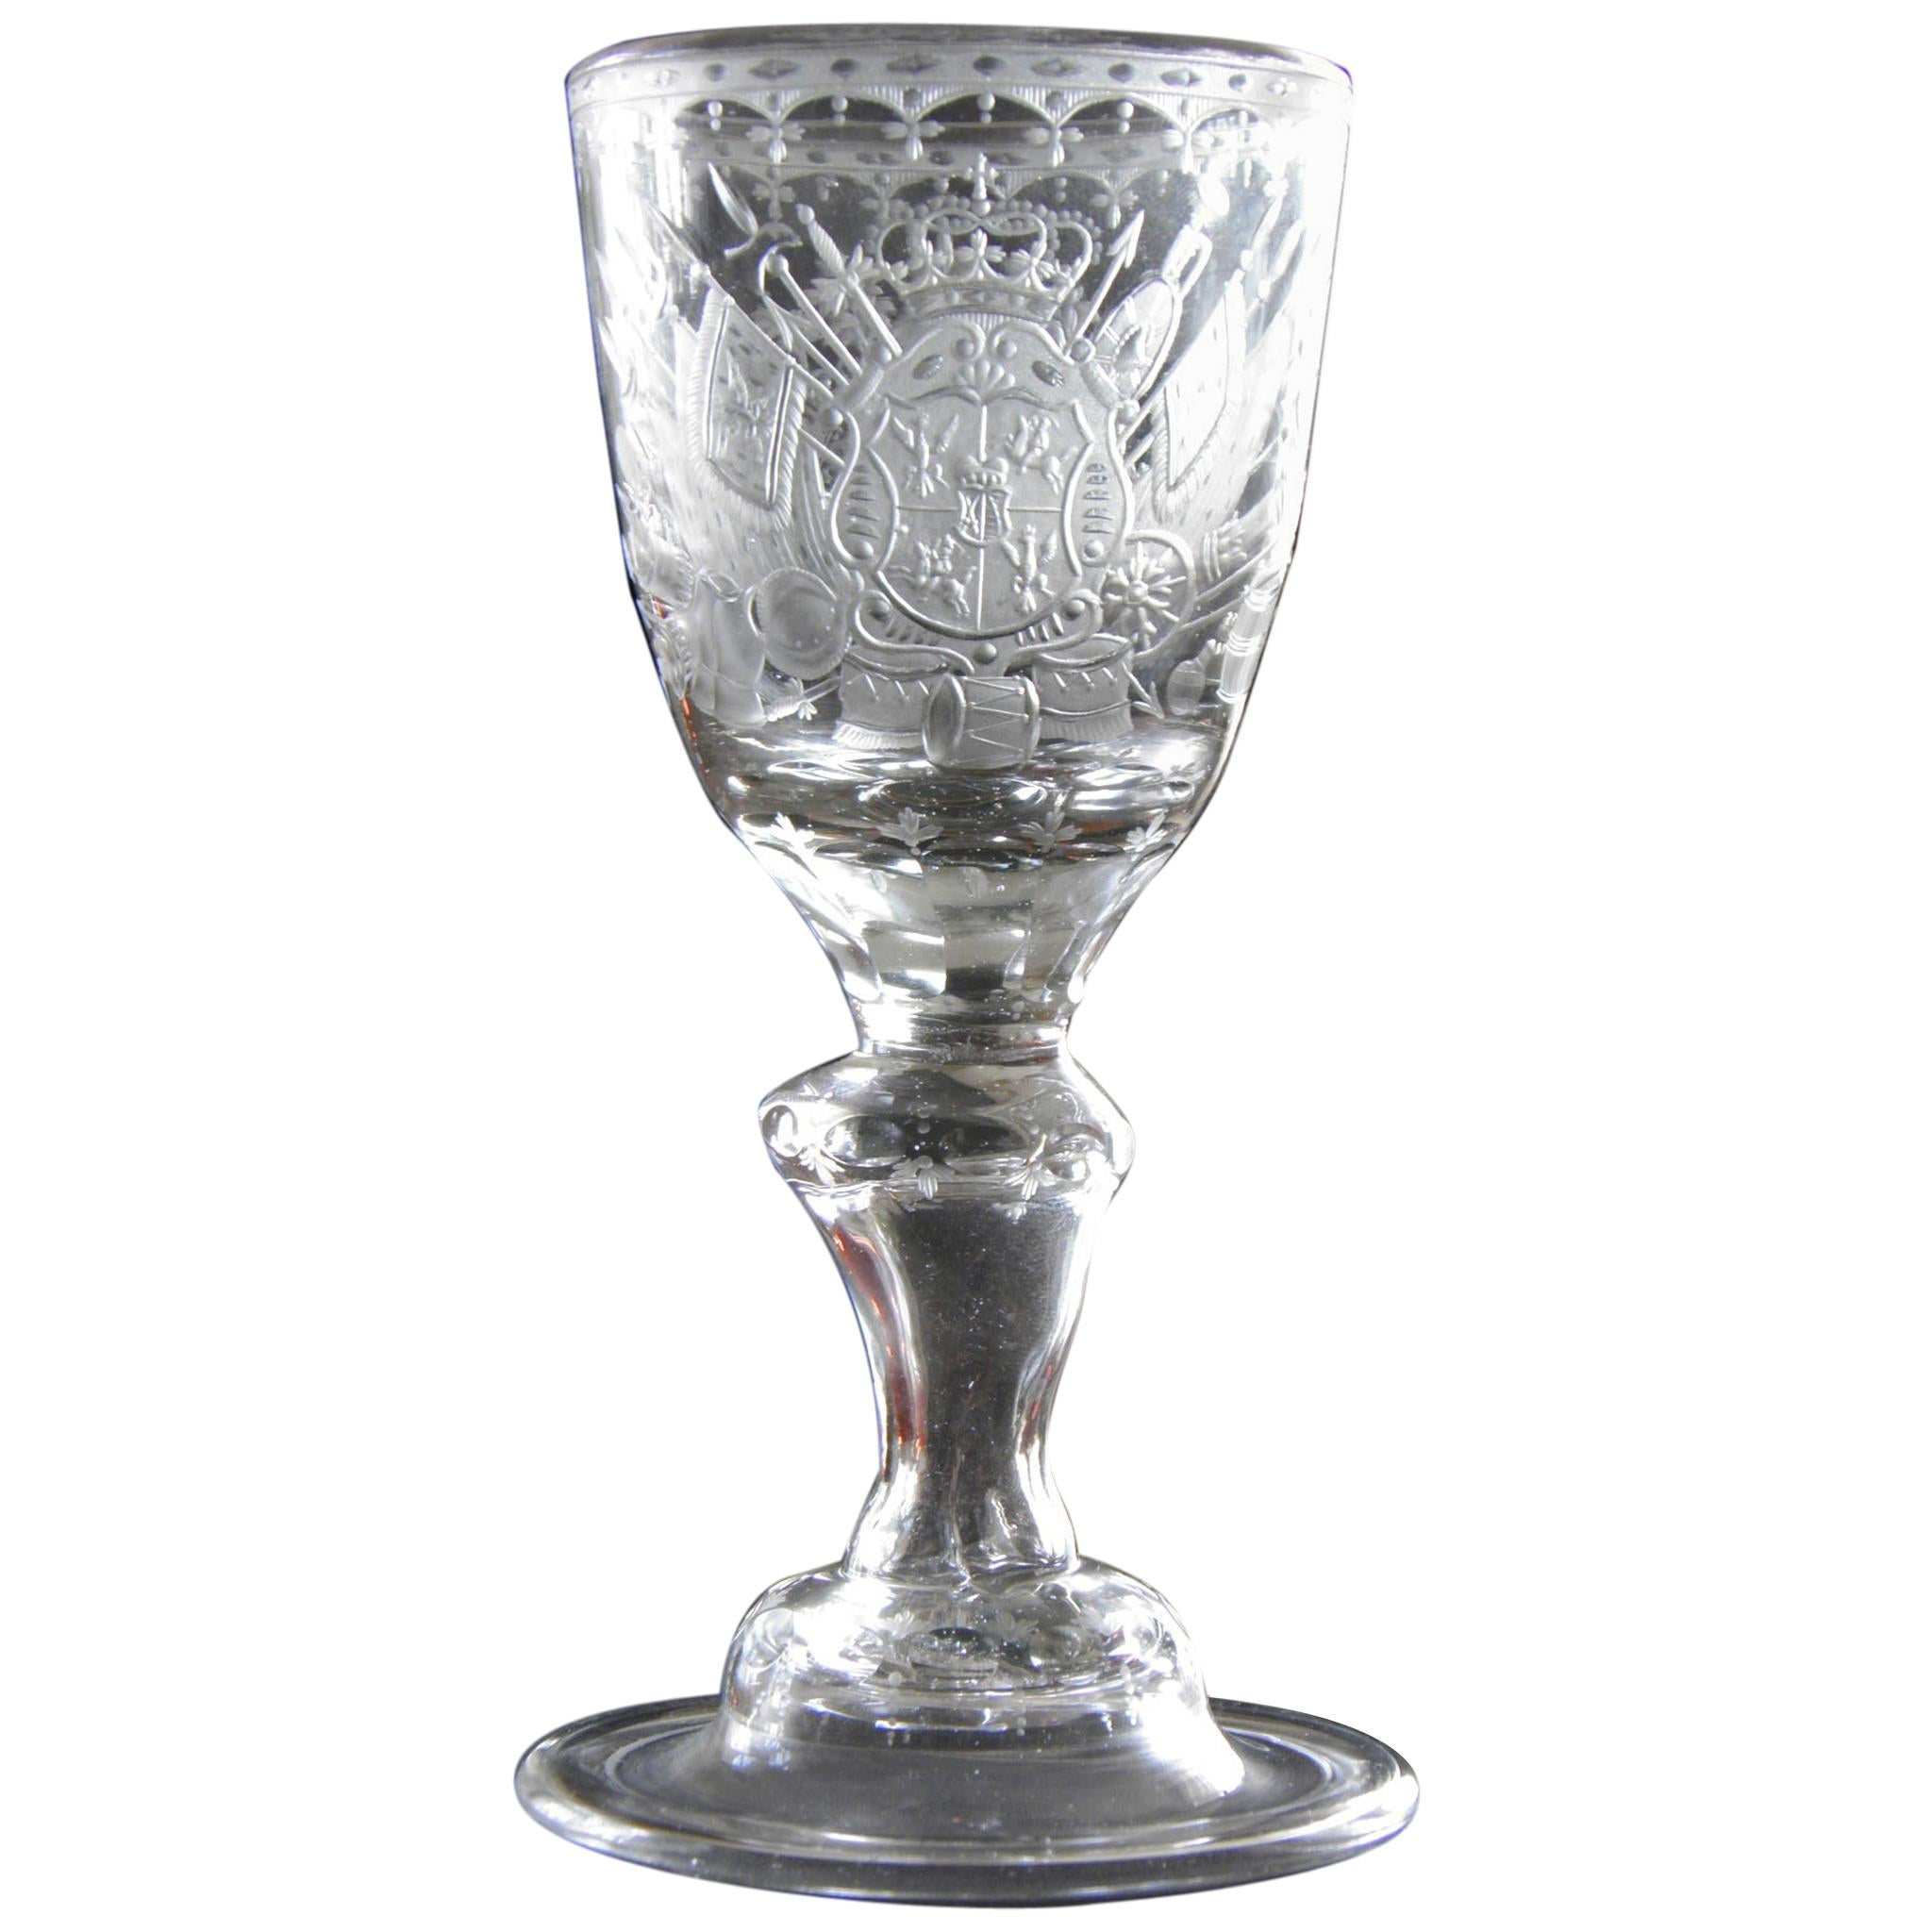 Antique European Historical Crystal Glass Goblet Augustus Rex, 18th Century